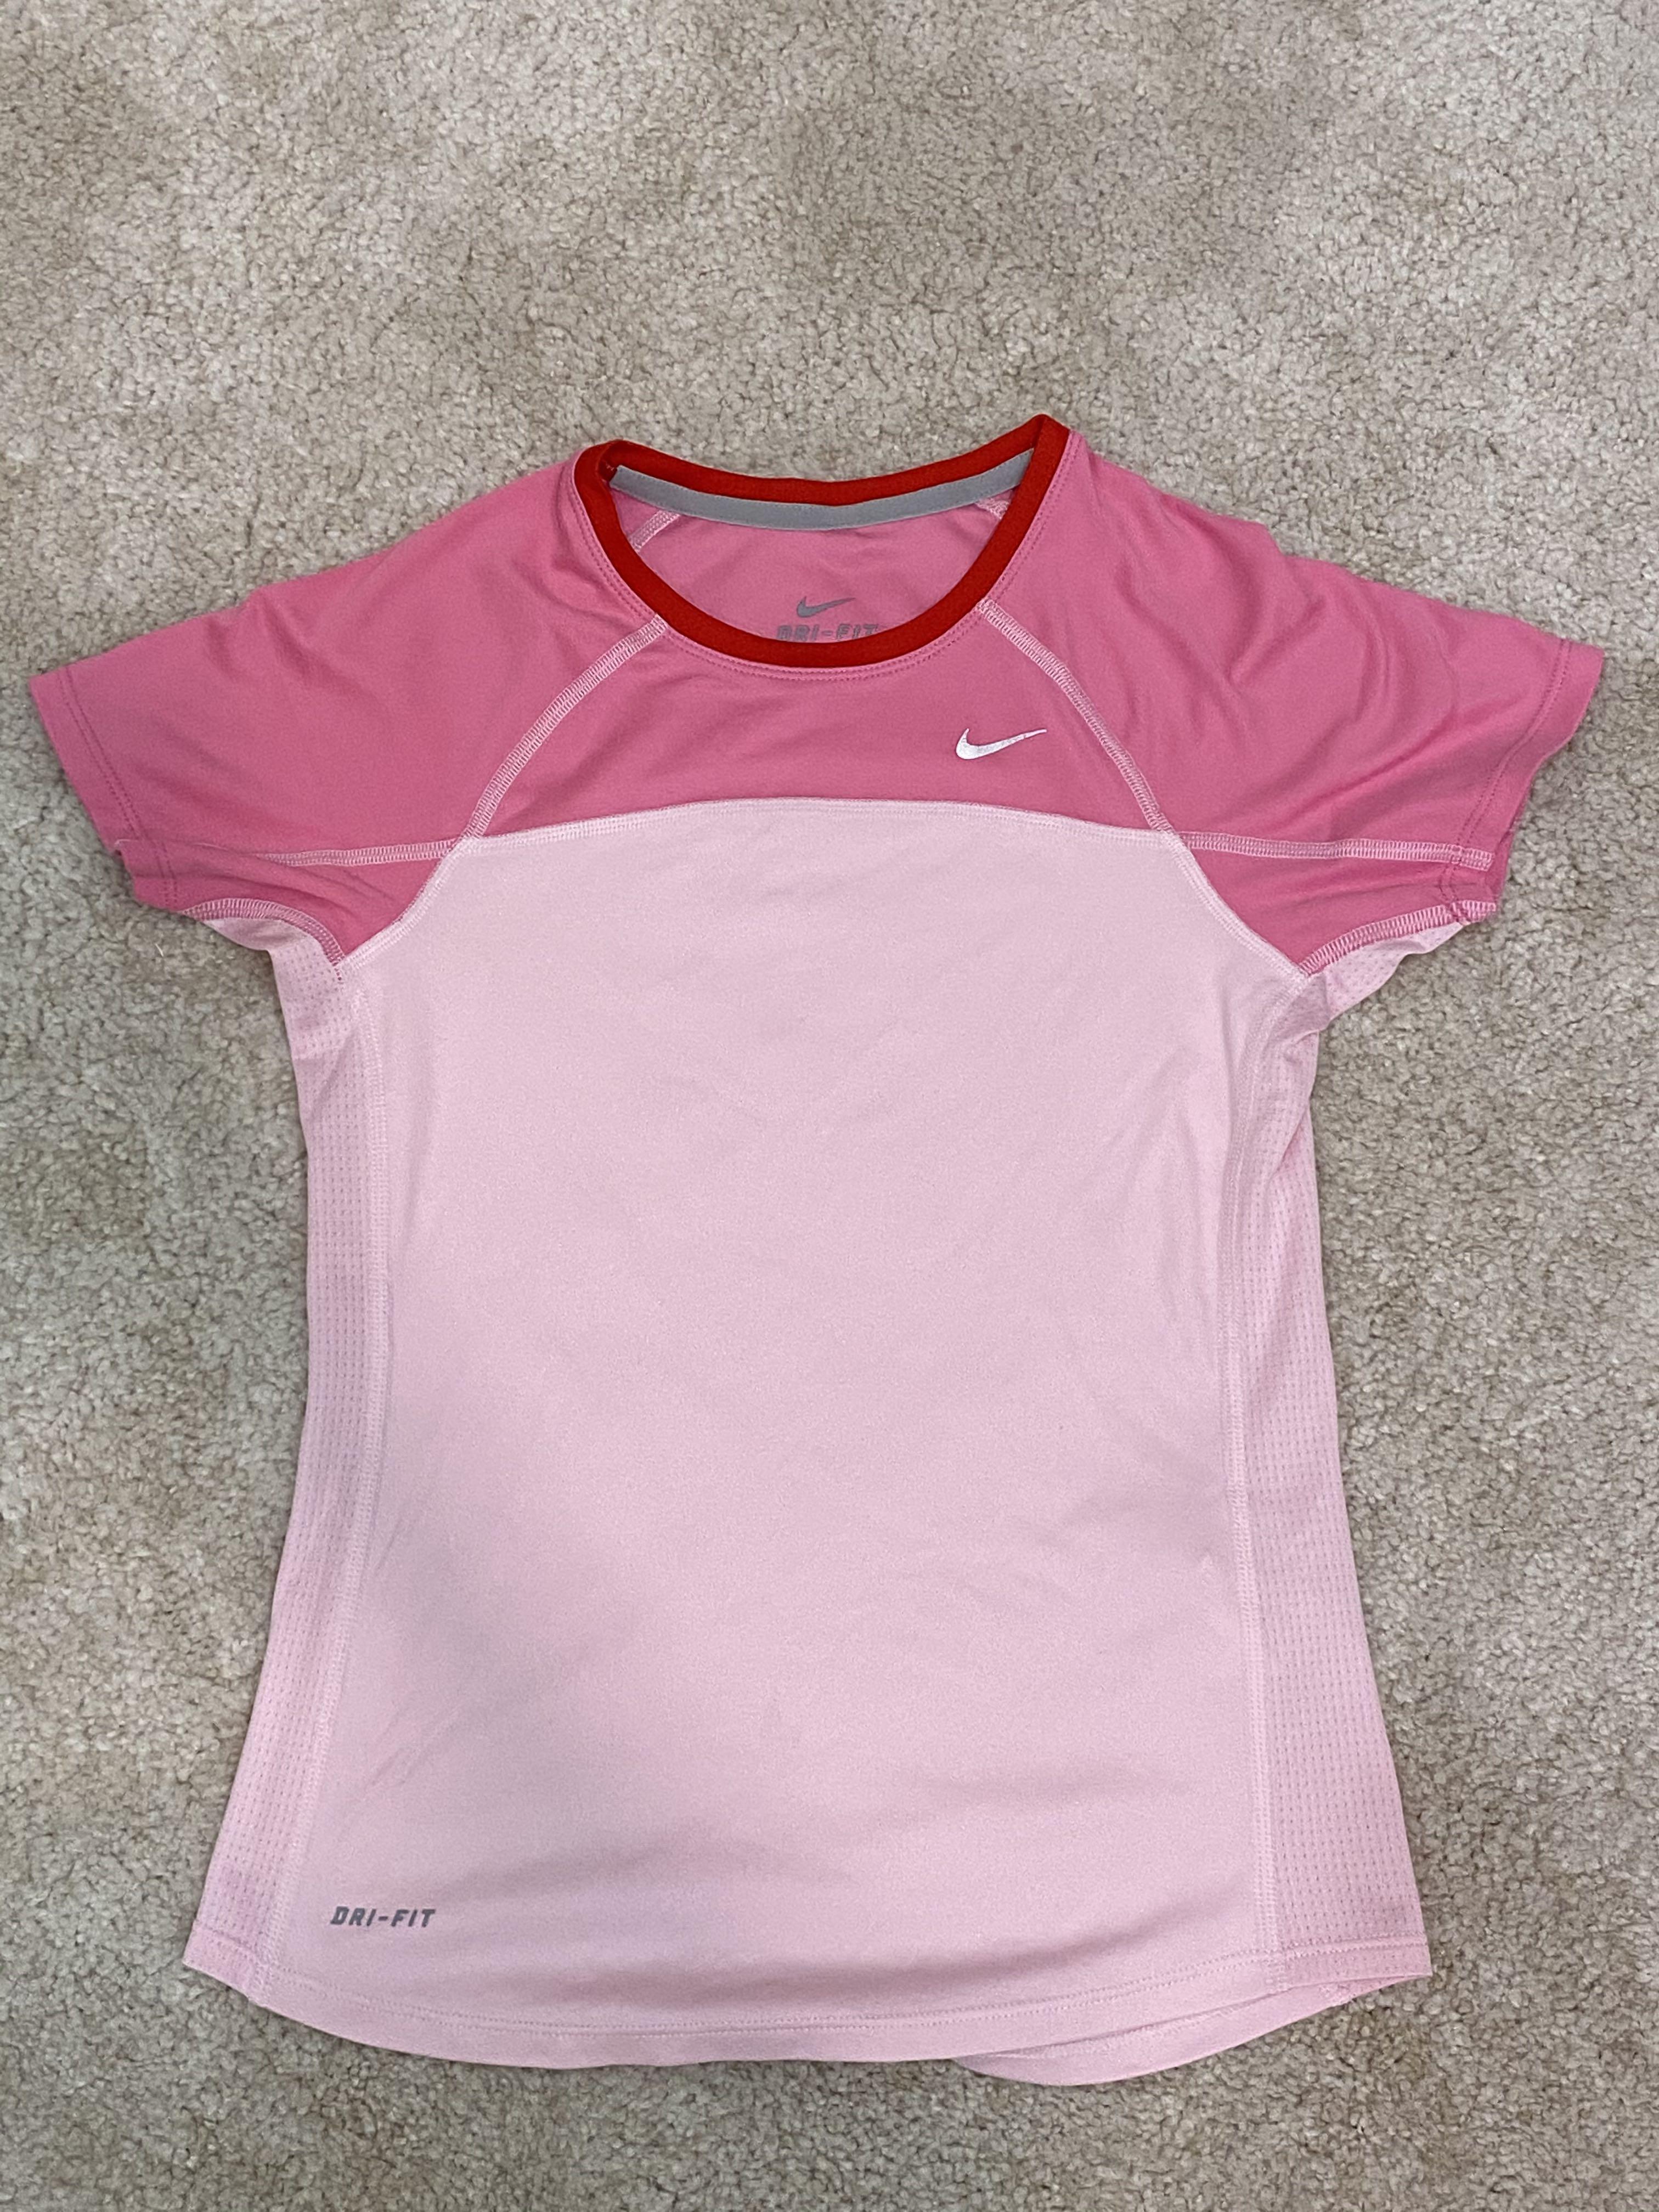 pink nike dri fit shirt